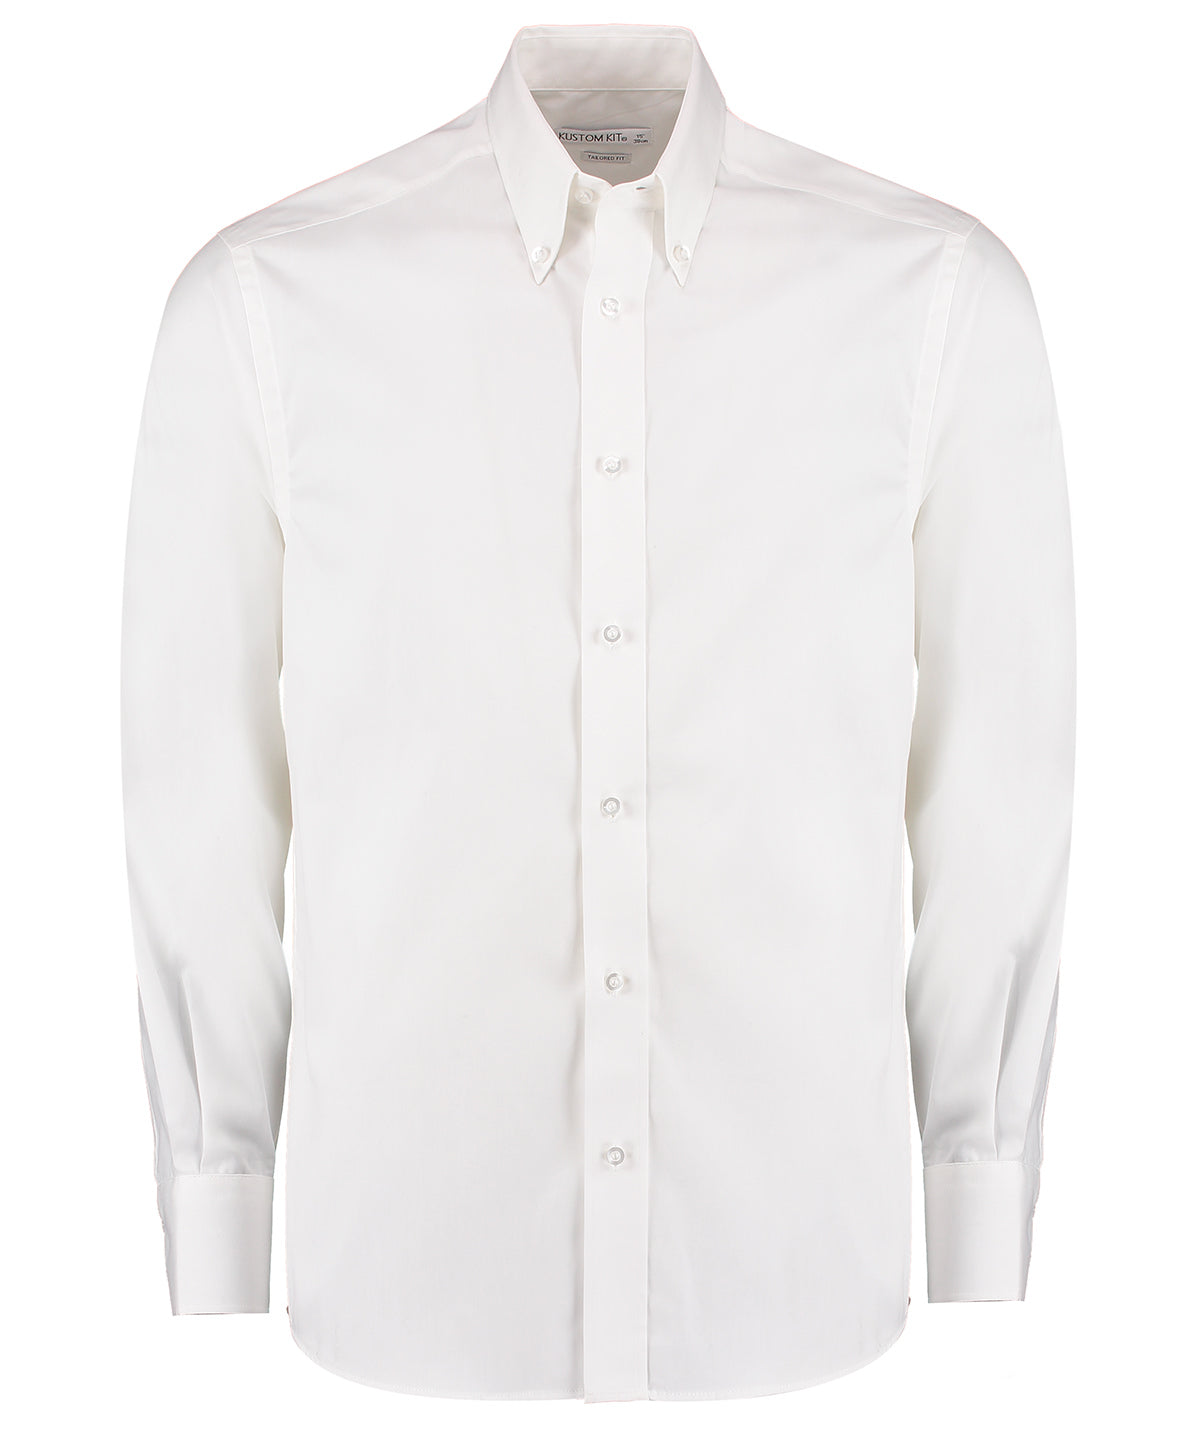 Personalised Shirts - Black Kustom Kit Premium Oxford shirt long-sleeved (tailored fit)